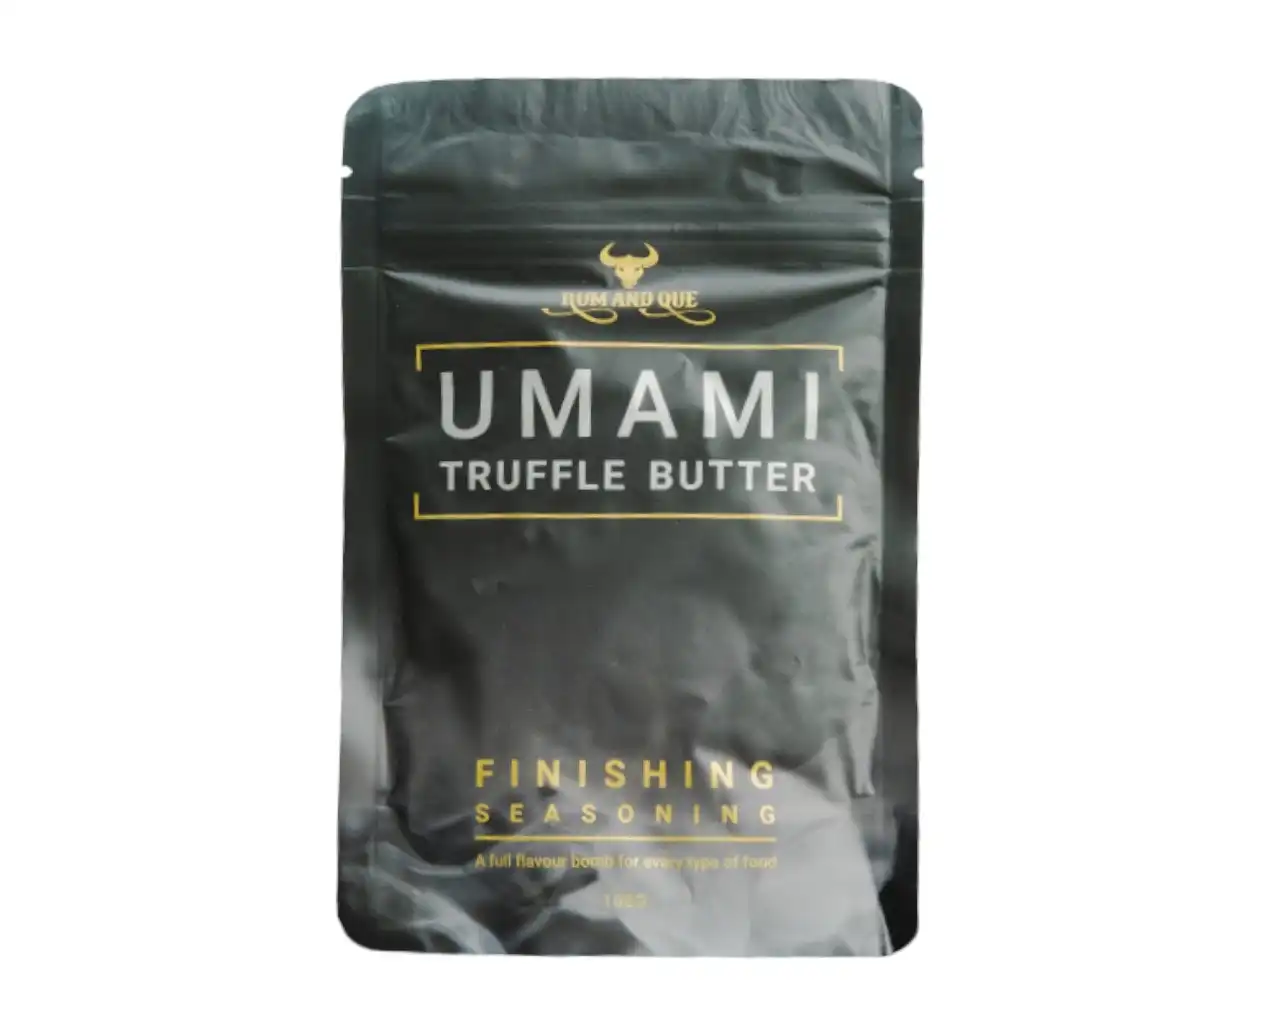 Rum & Que Umami Truffle Butter Finishing Seasoning